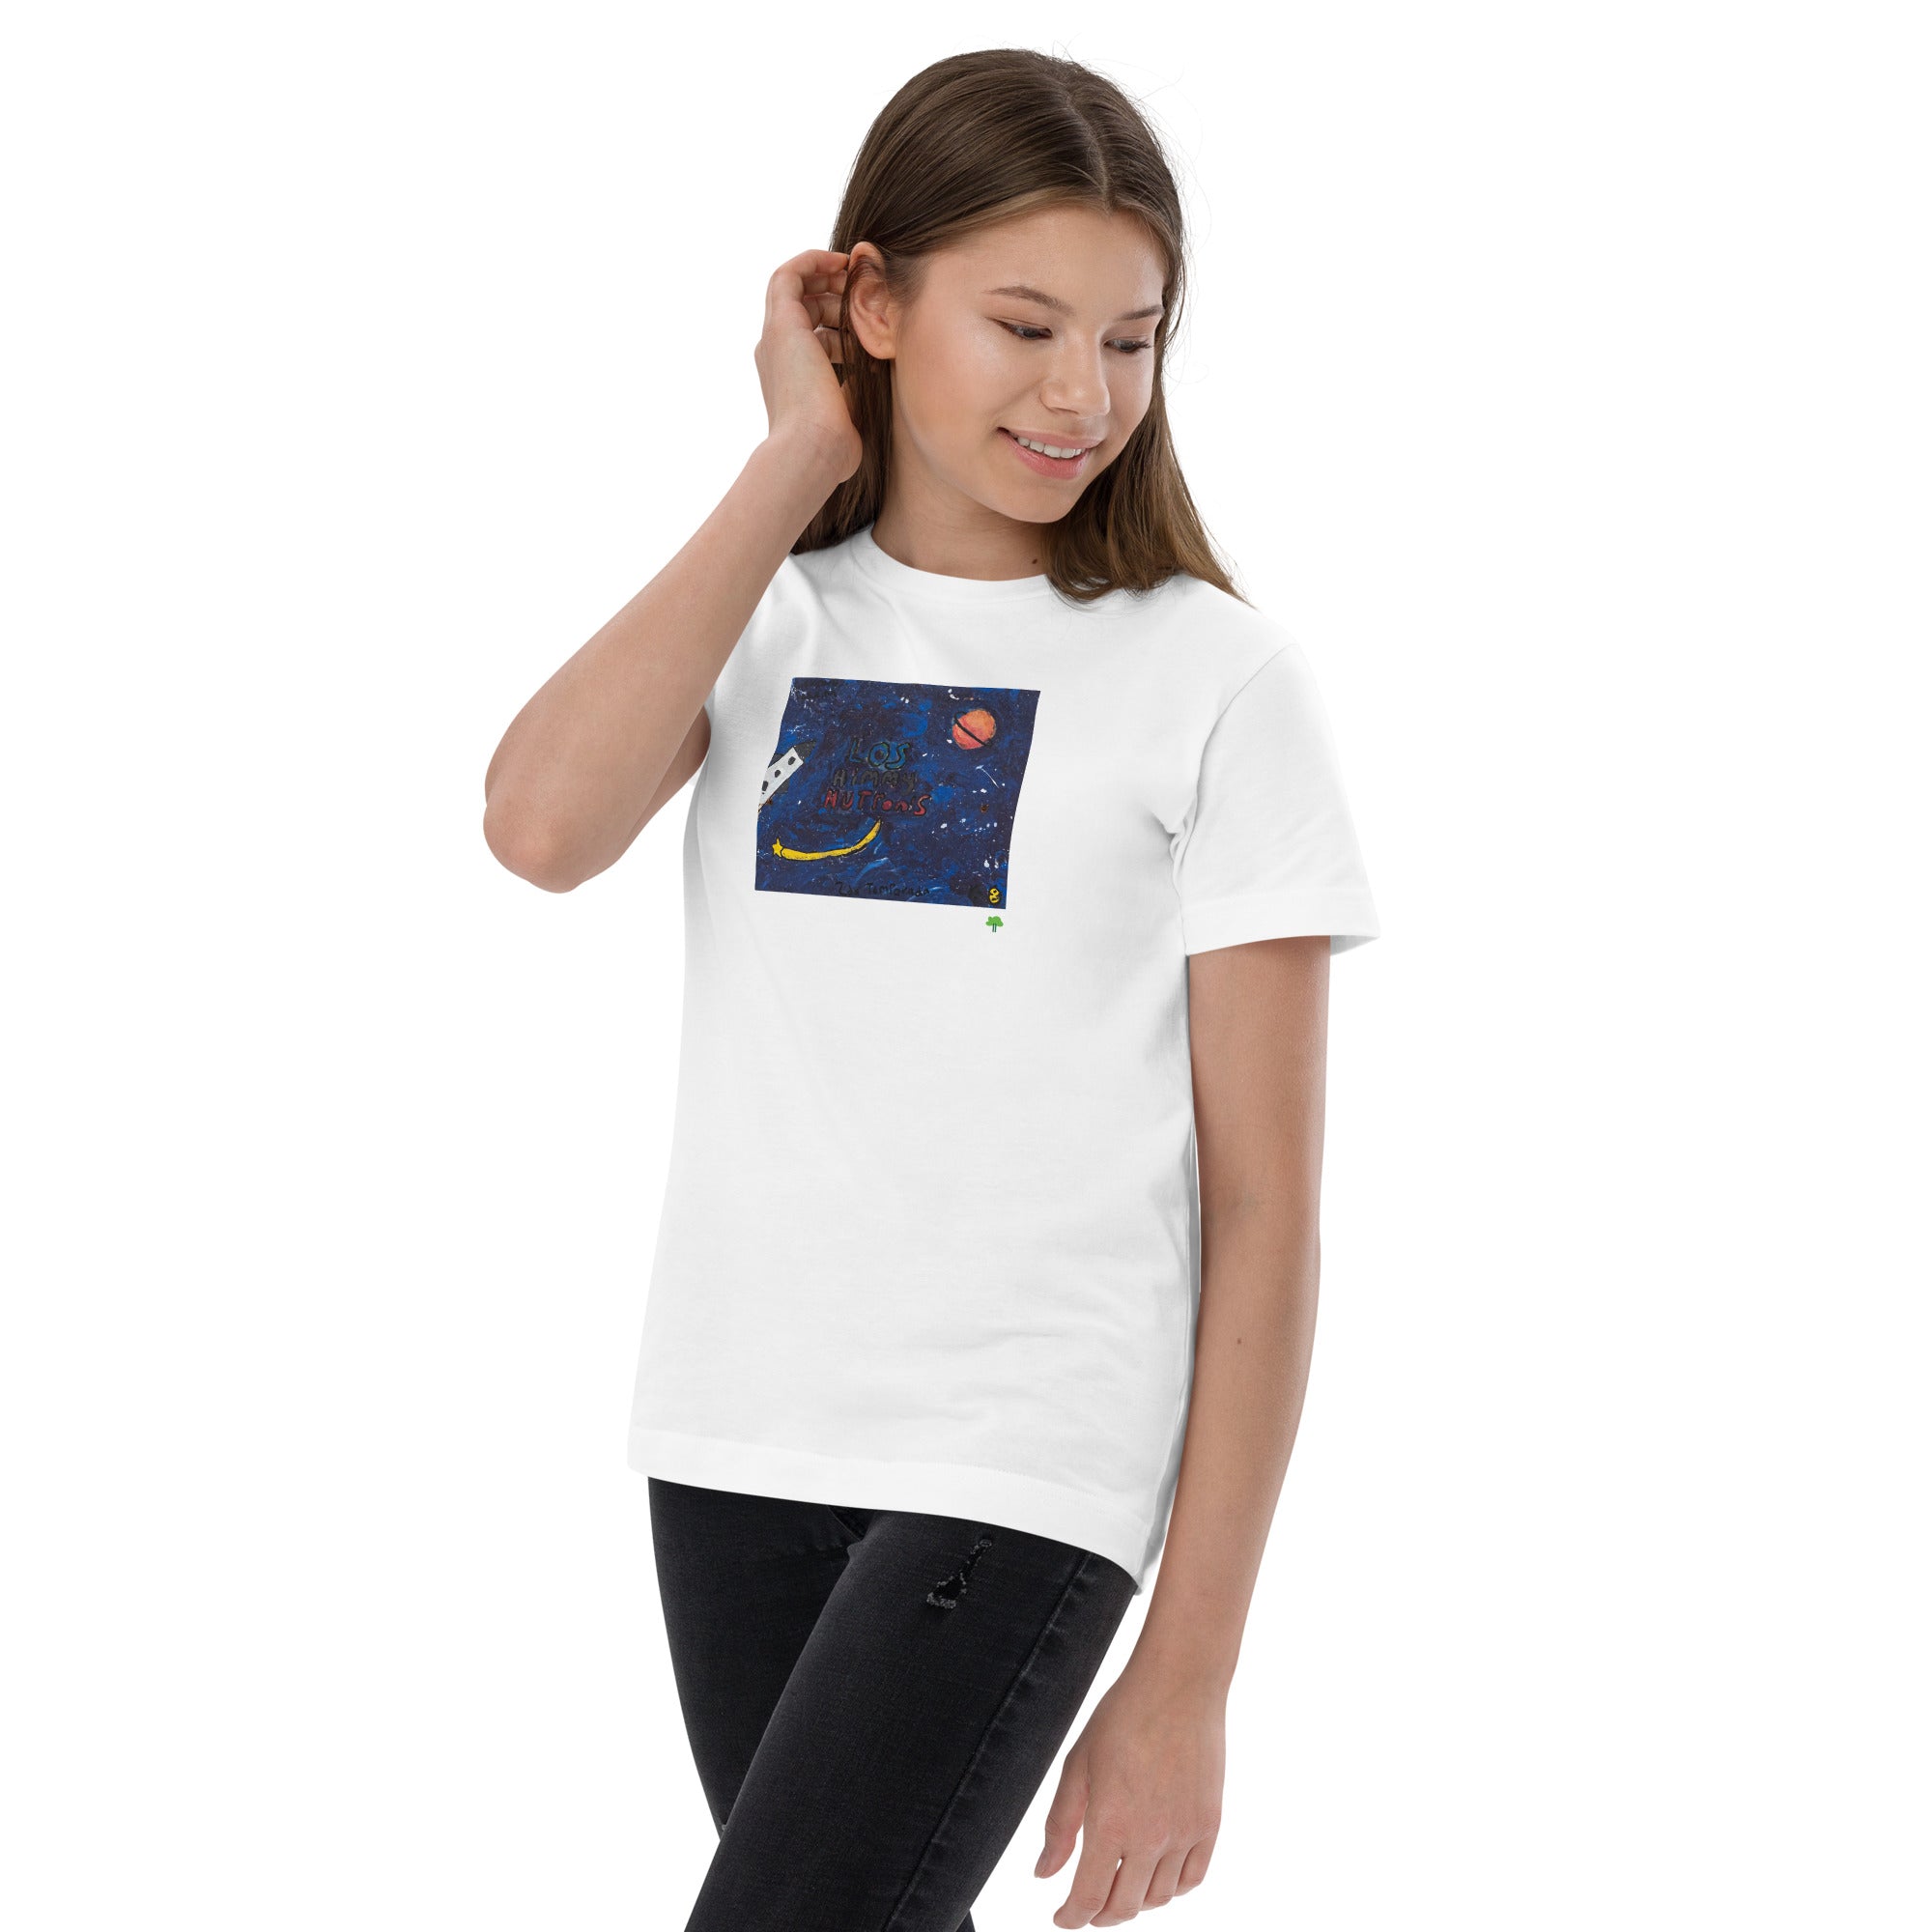 II Temp - Sabana - K8 | Youth jersey t-shirt